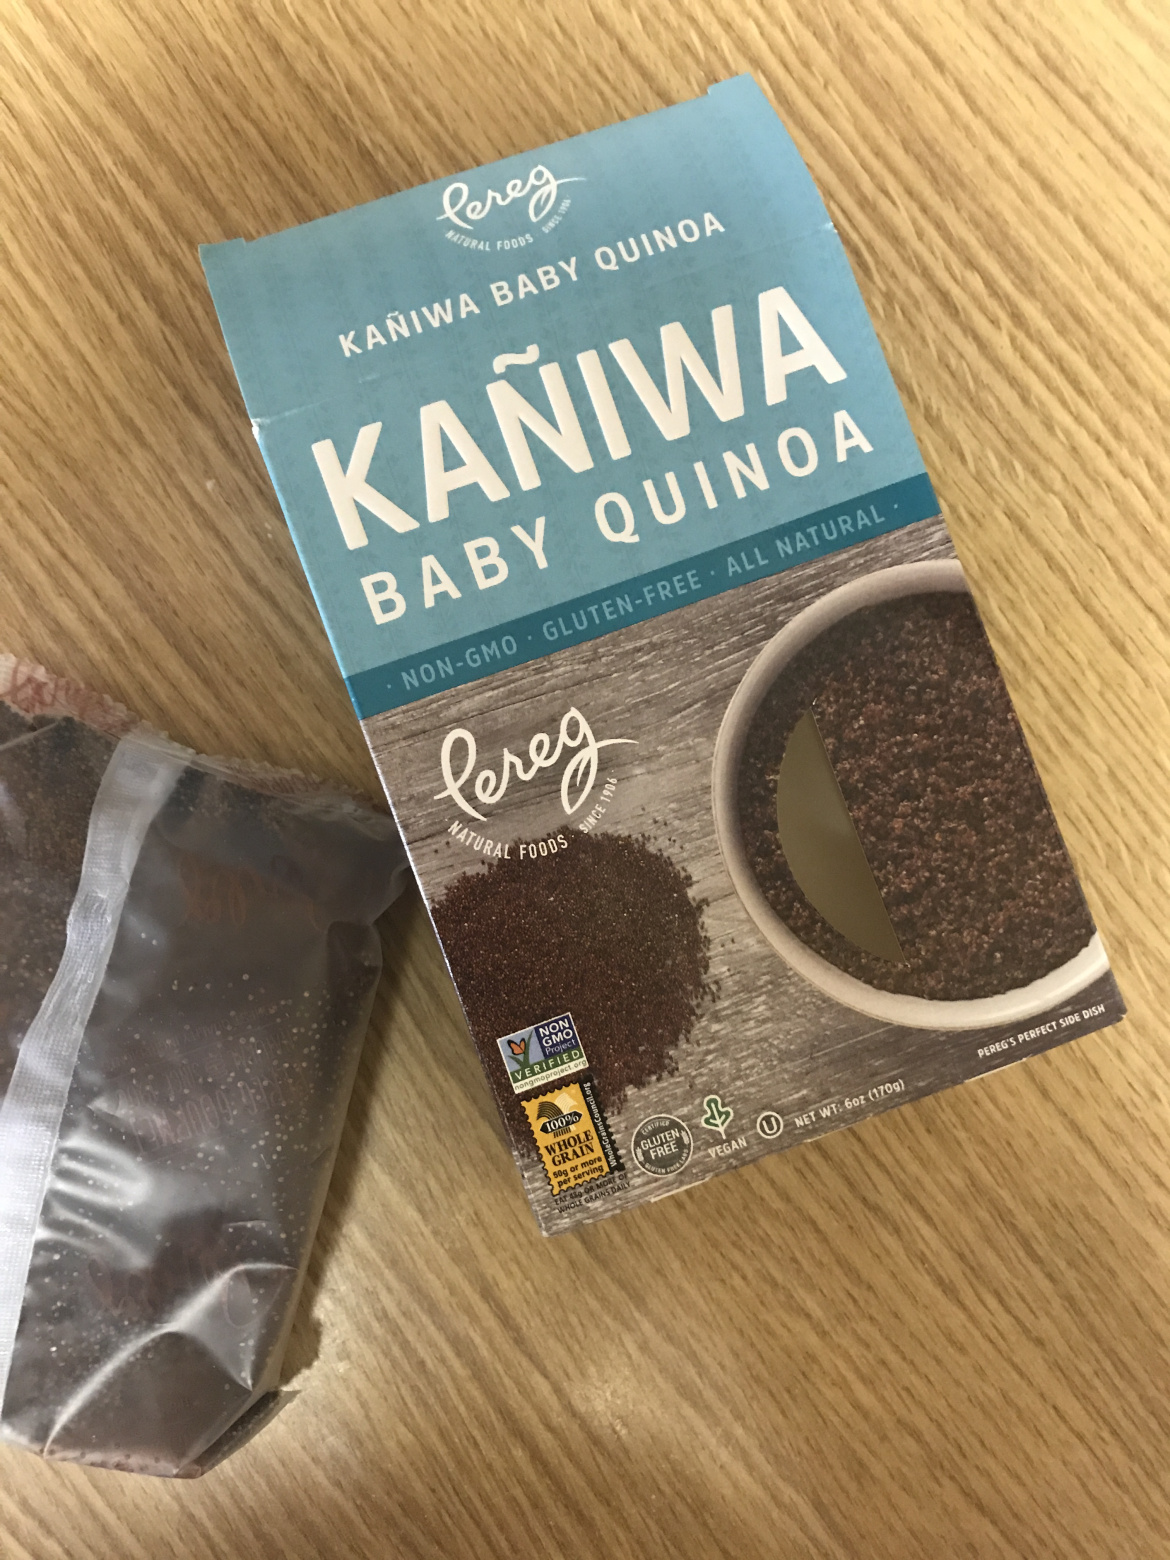 KAŇIWA Baby Quinoa by Pereg Natural Foods